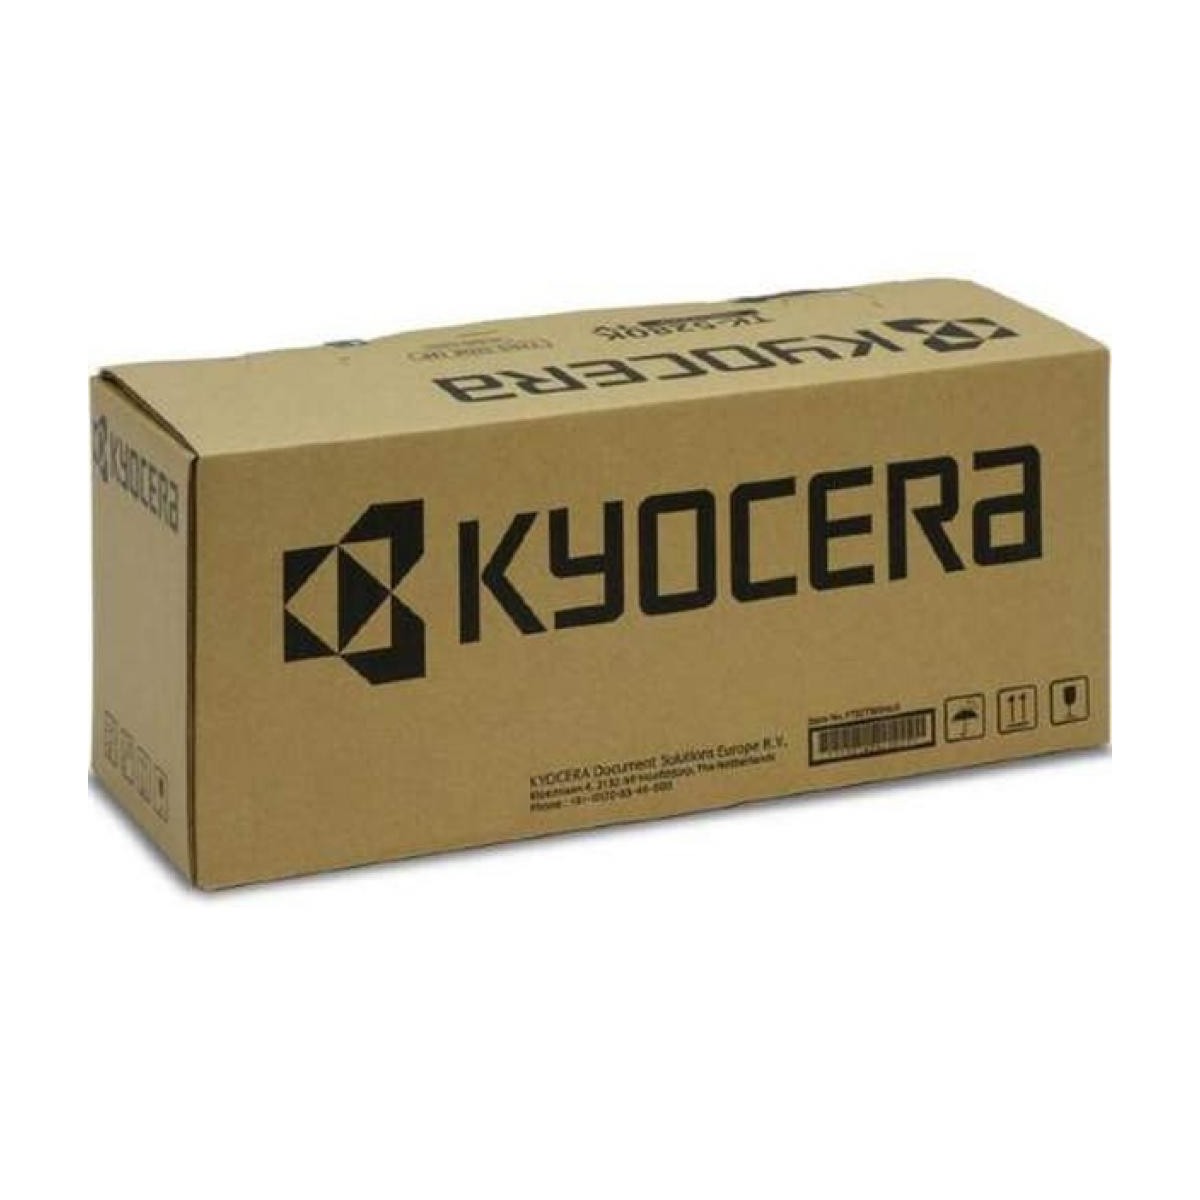 Kyocera Maintenance Kit MK-801B Pages 200.000